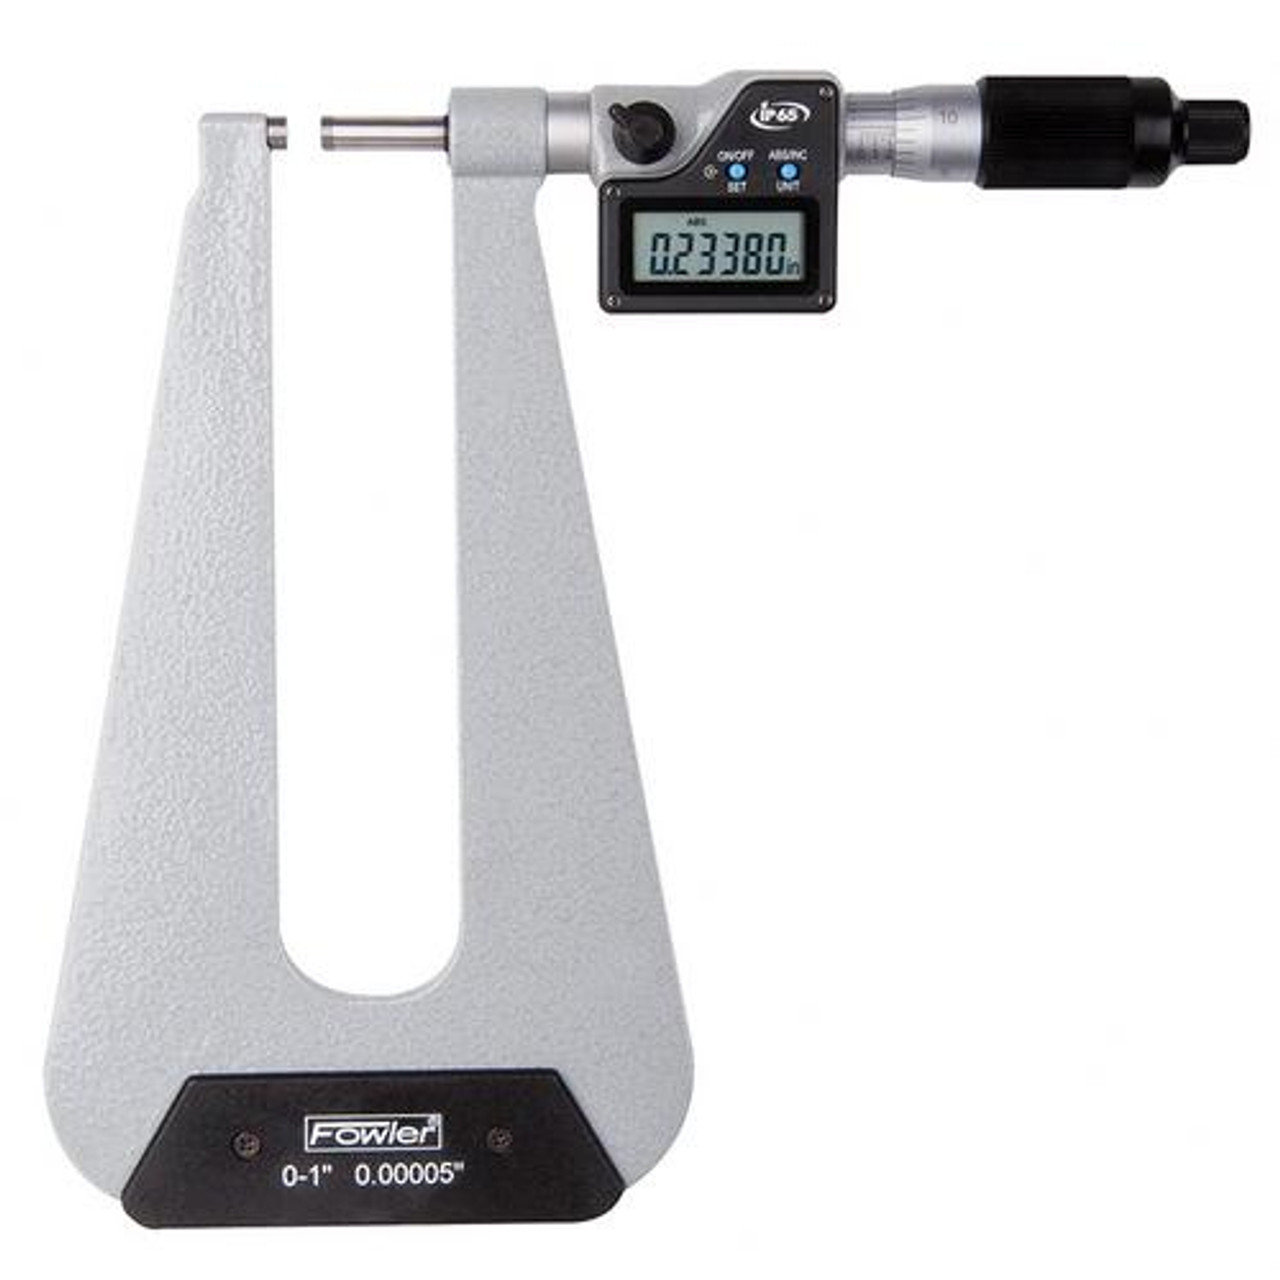 fowler 54-517-001 deep throat electronic micrometer flat anvil